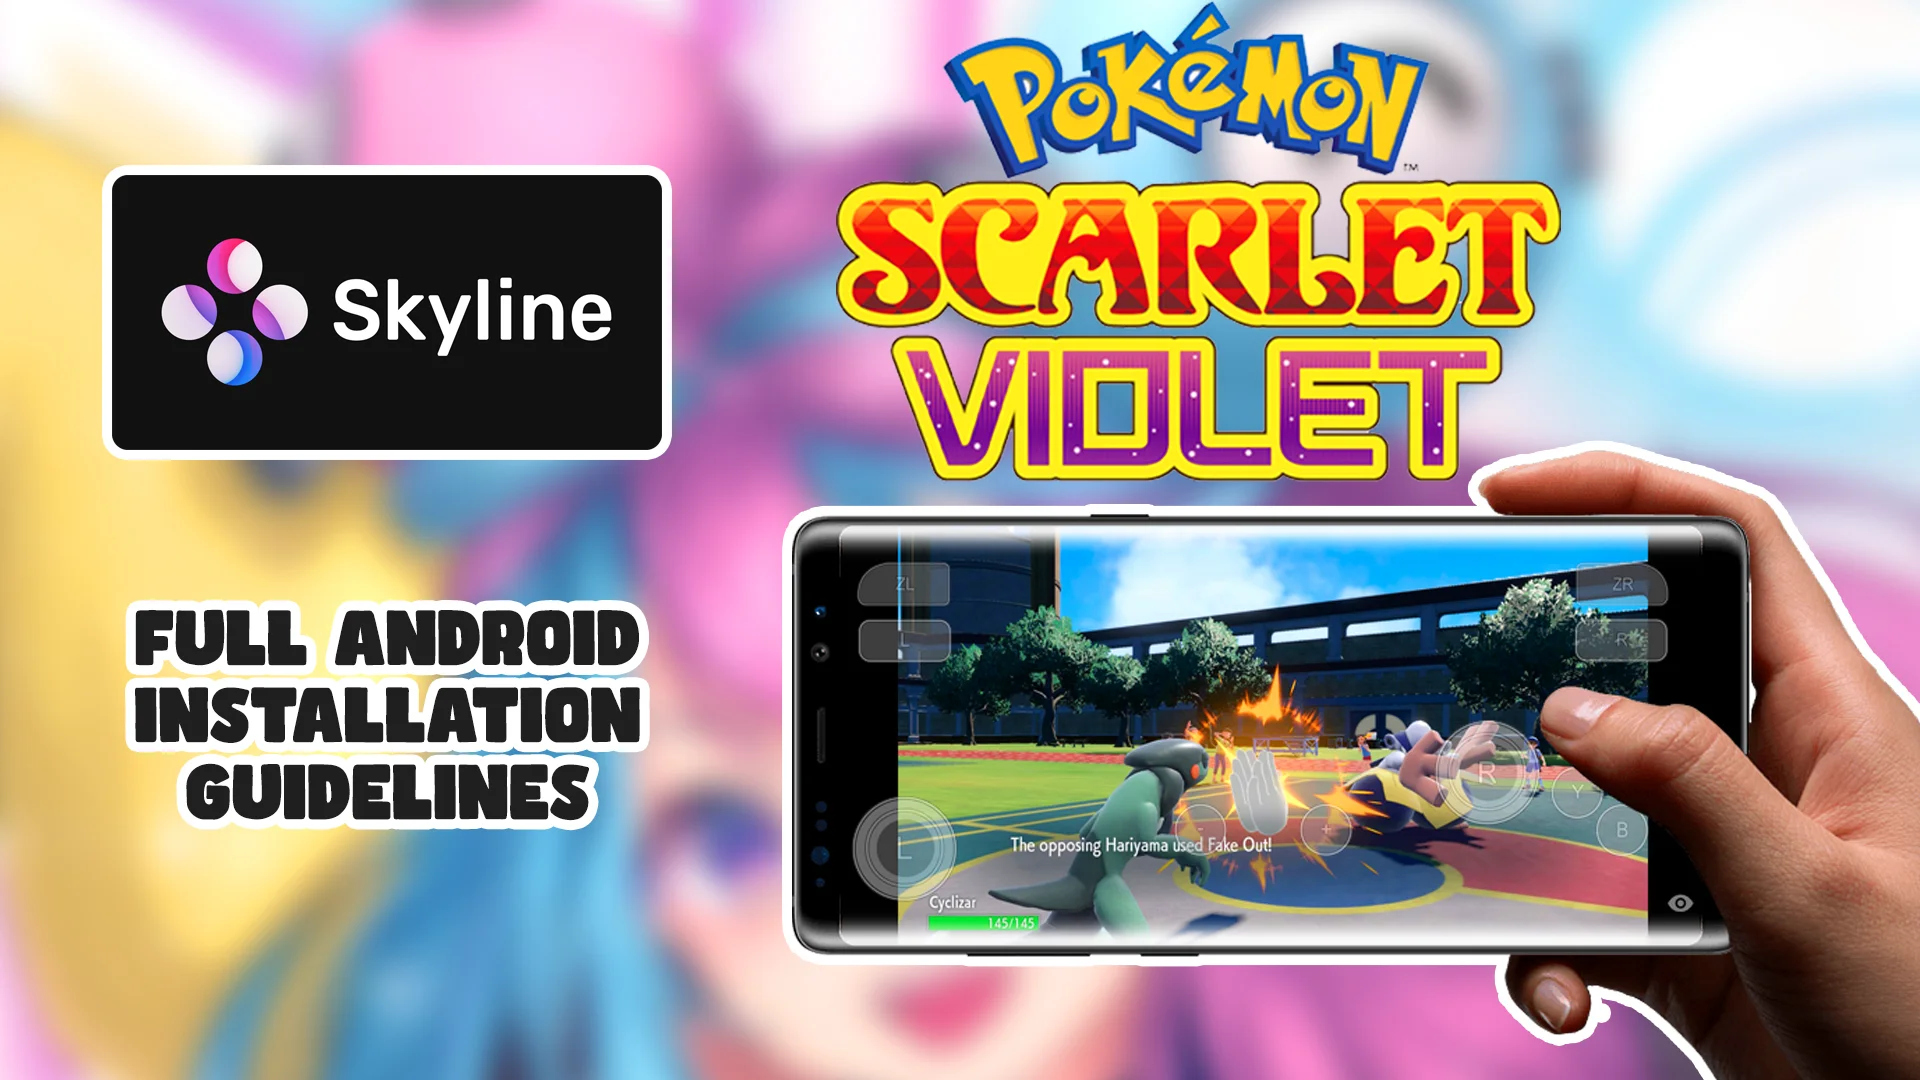 How to Download Install & Setup Skyline Emulator with Pokémon Scarlet and  Violet On Mobile on Vimeo